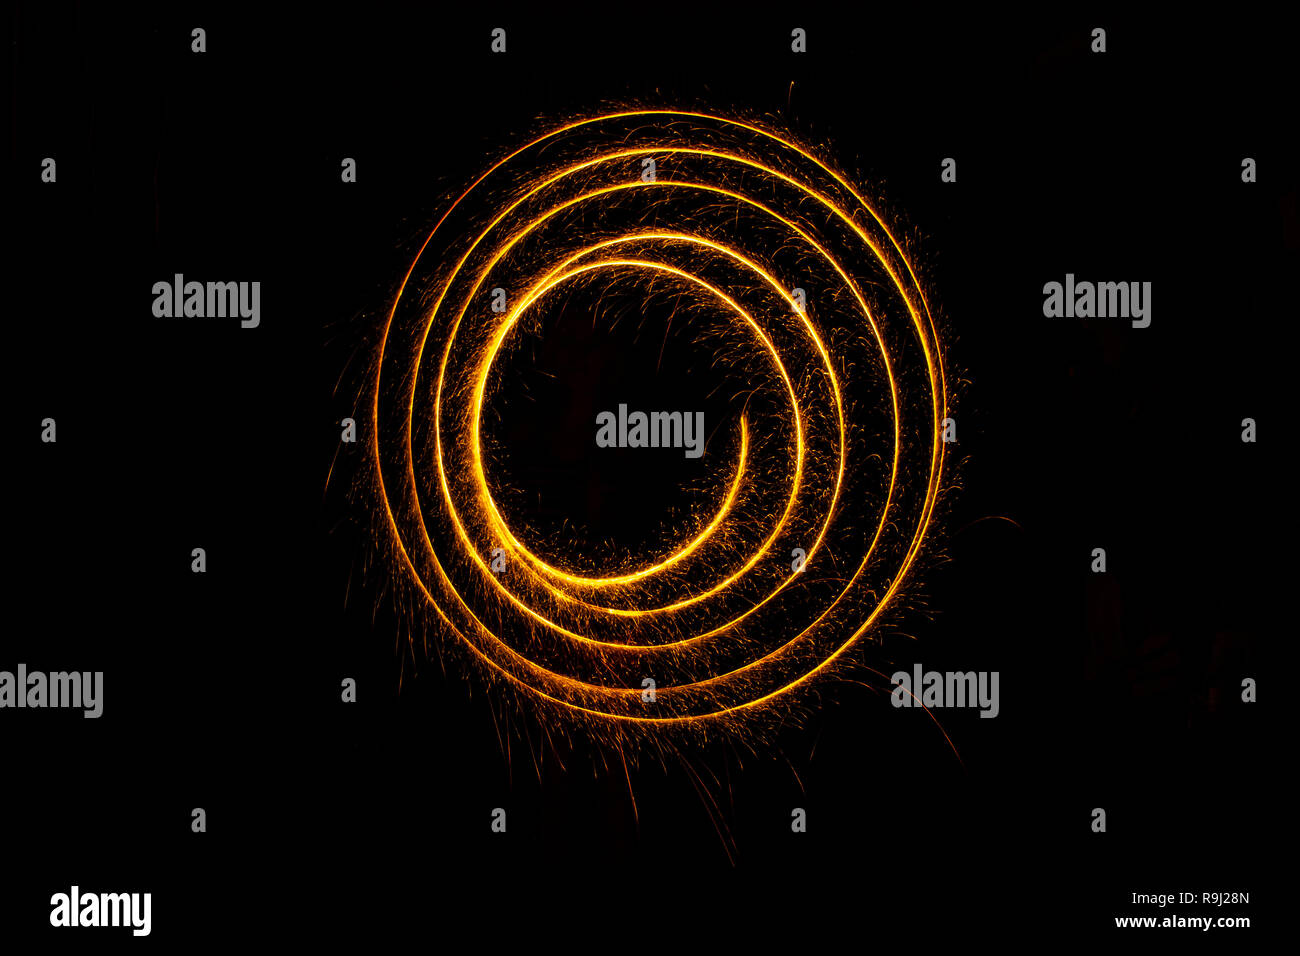 Abstract sparkler firework light on black background. Long exposure pattern Stock Photo